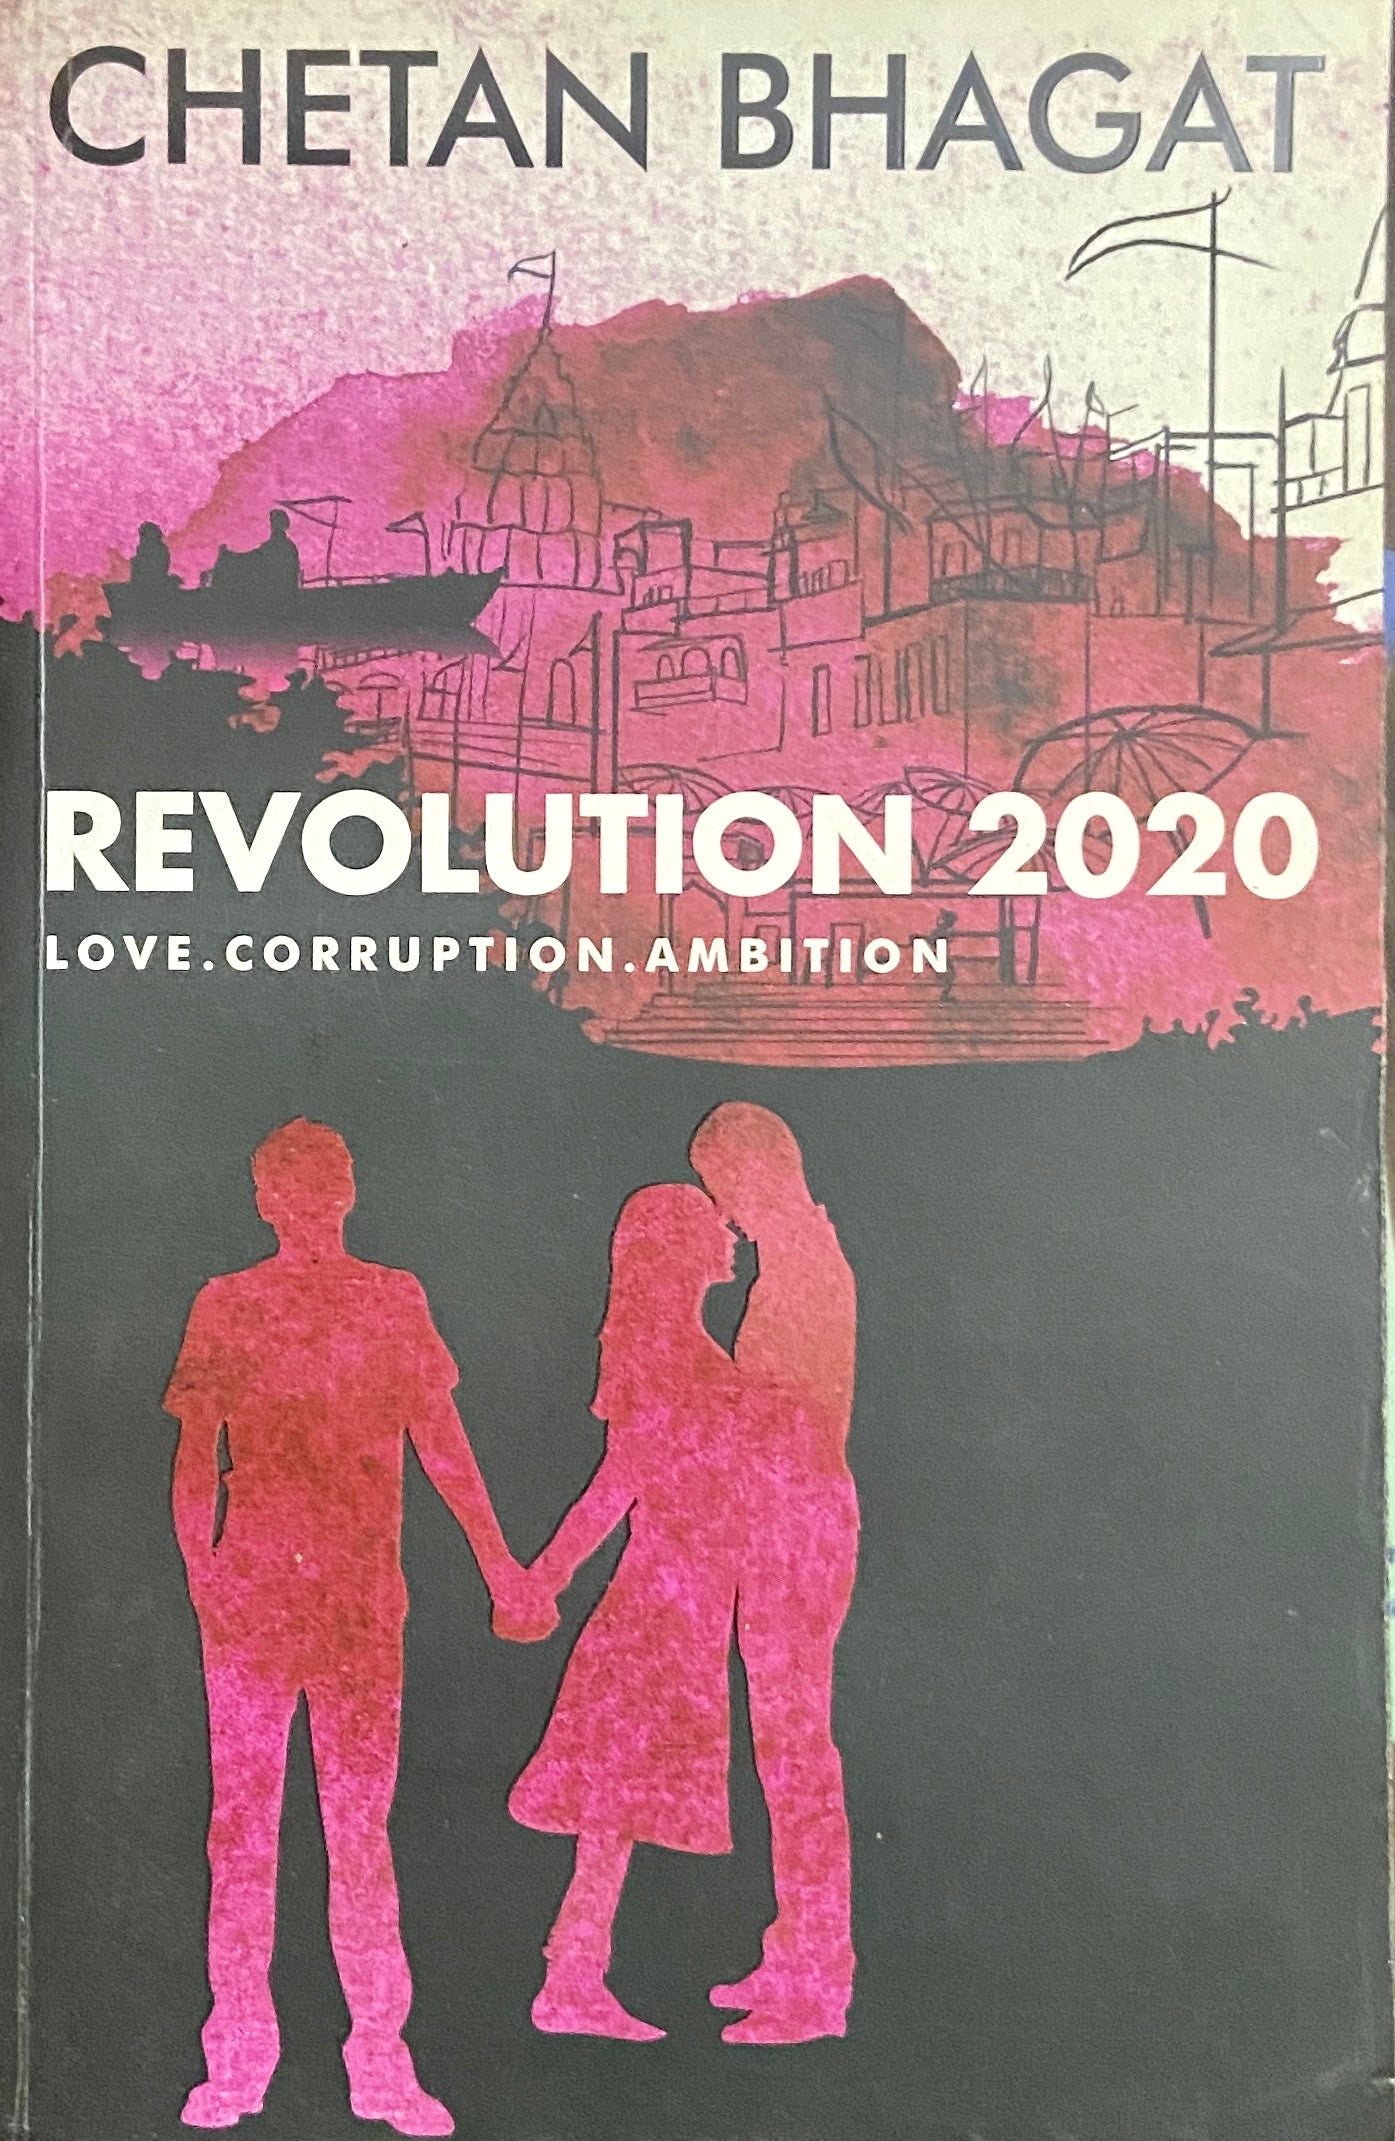 Revolution 2020 by CHetan Bhagat